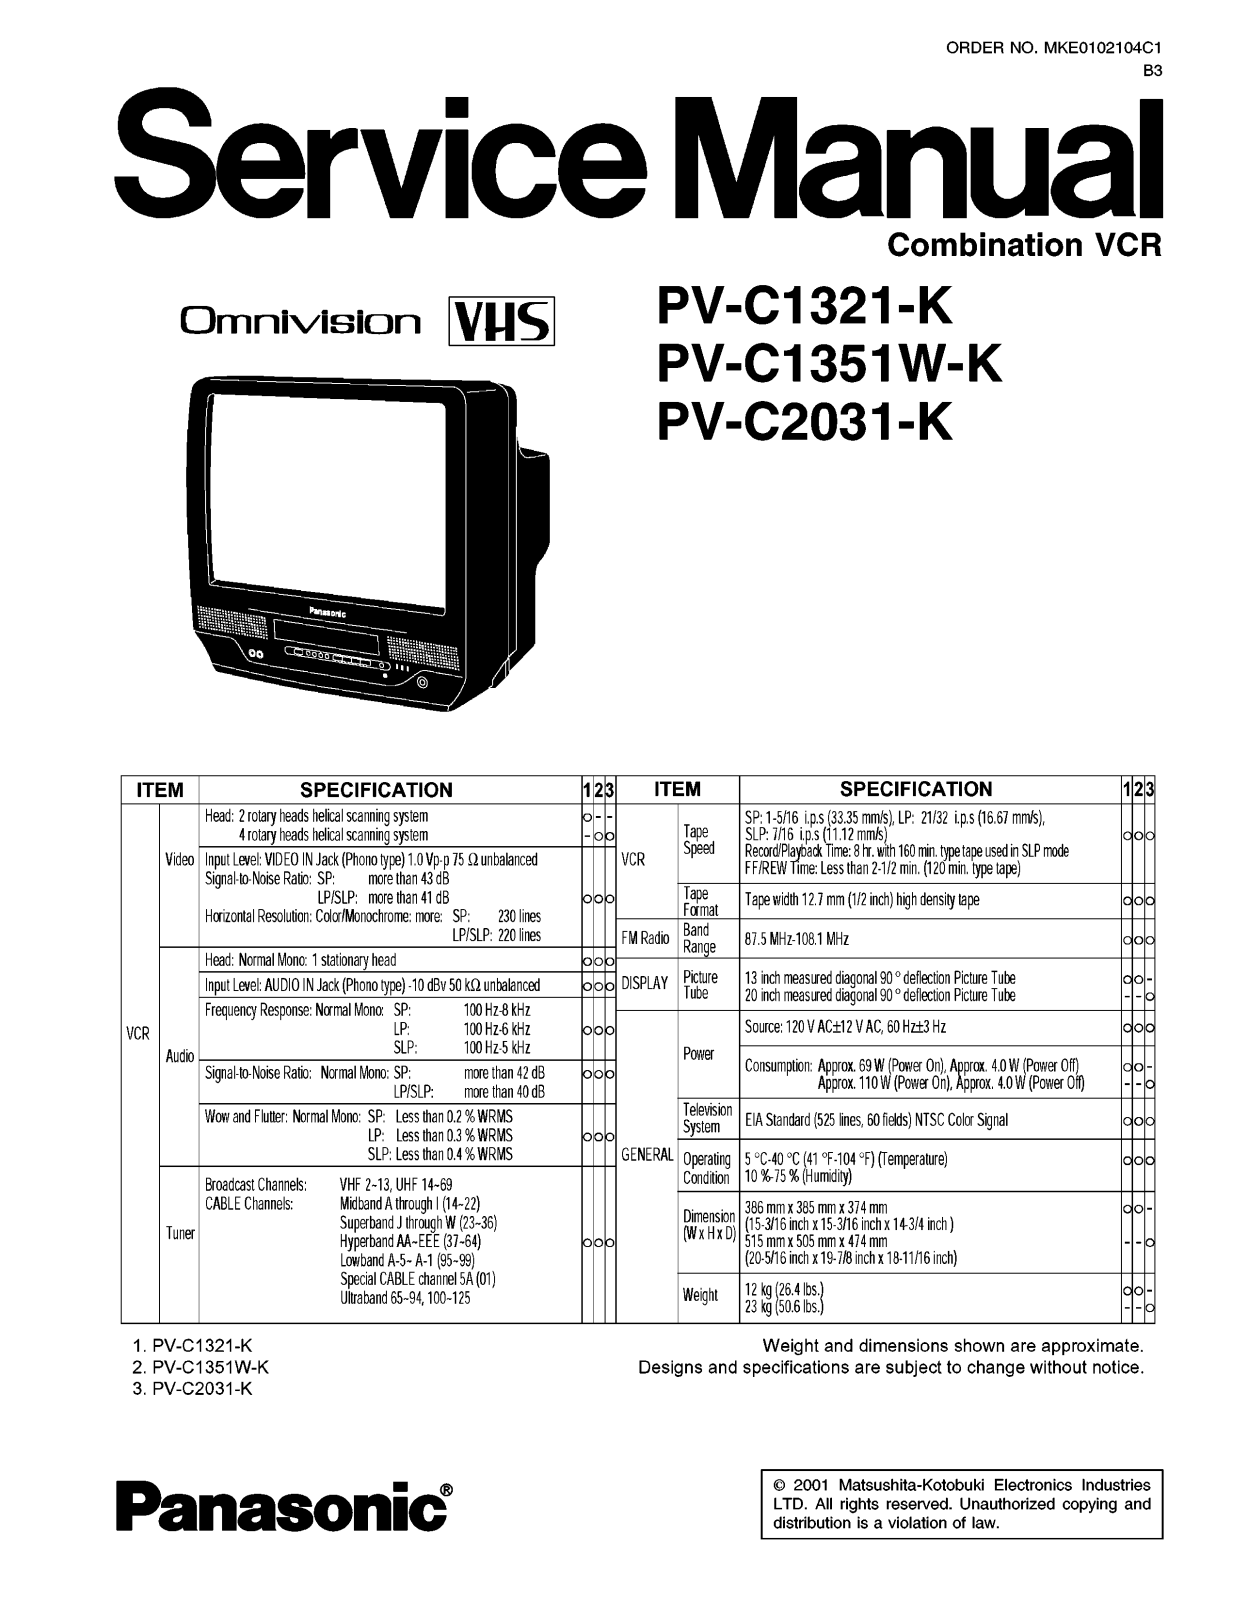 panasonic PV-C1321-K, PV-C1351W-K, PV-C2031-K Service Manual